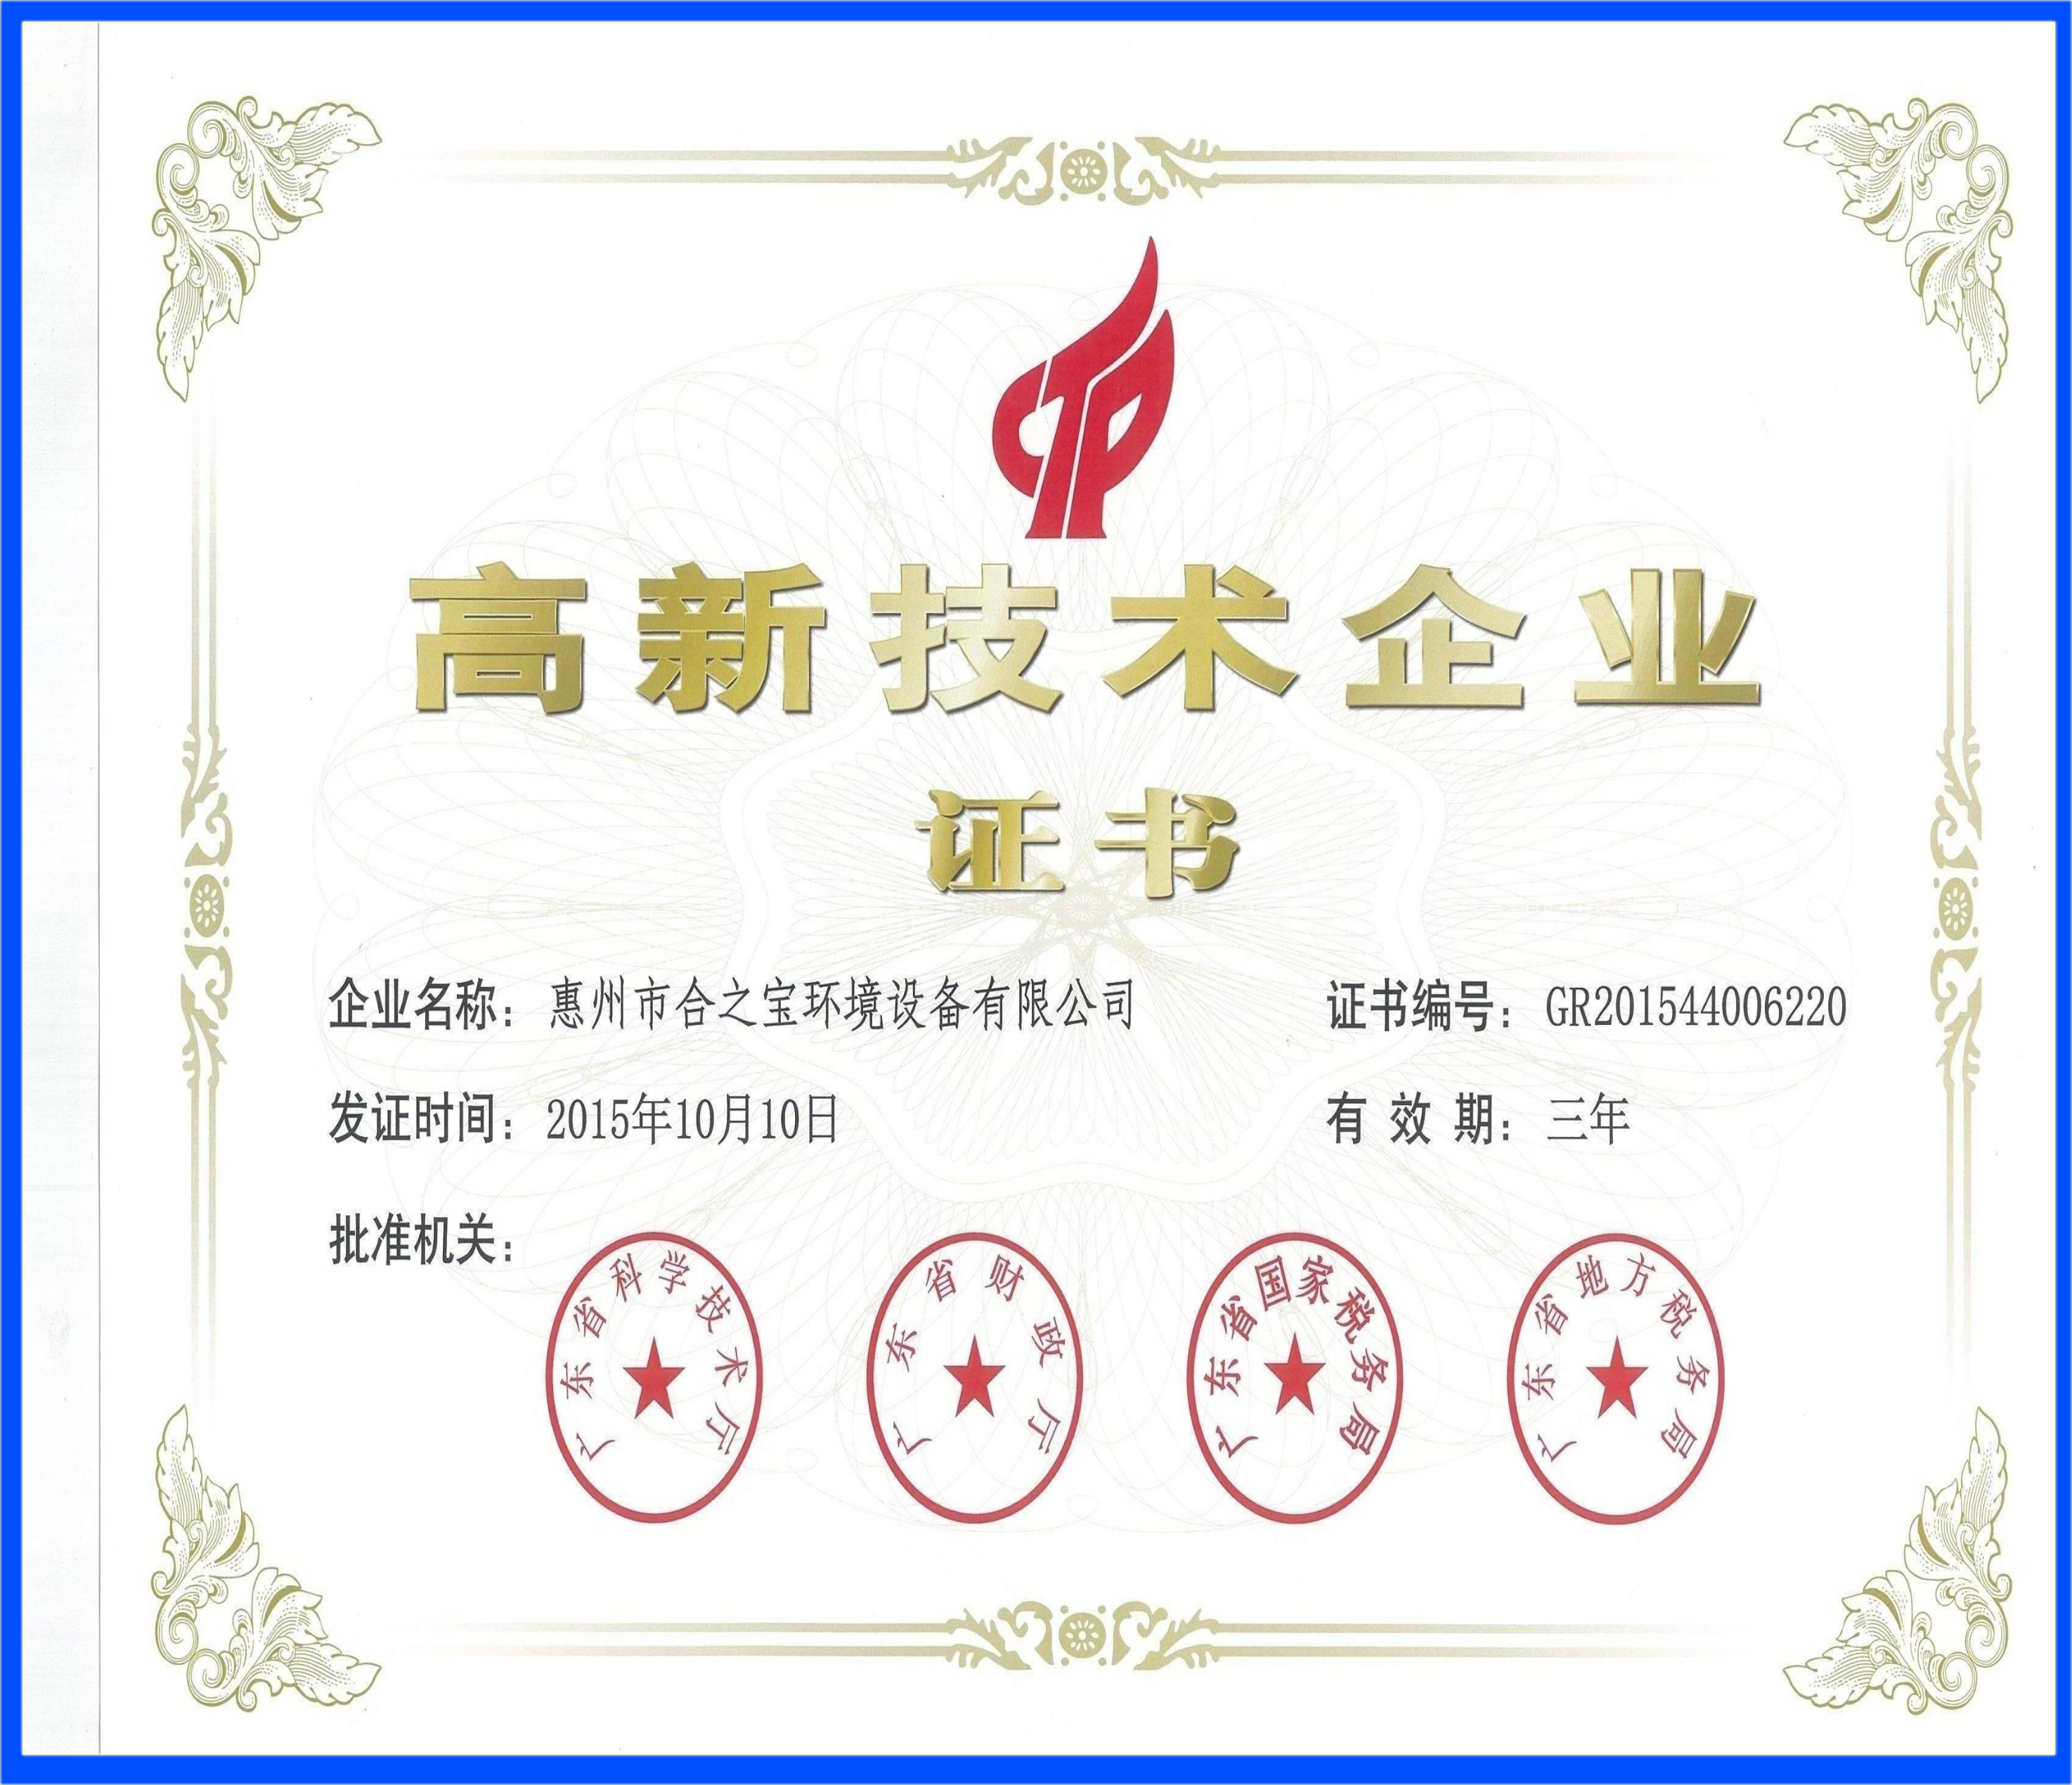 Huizhou's Only National Productivity Promotion Award